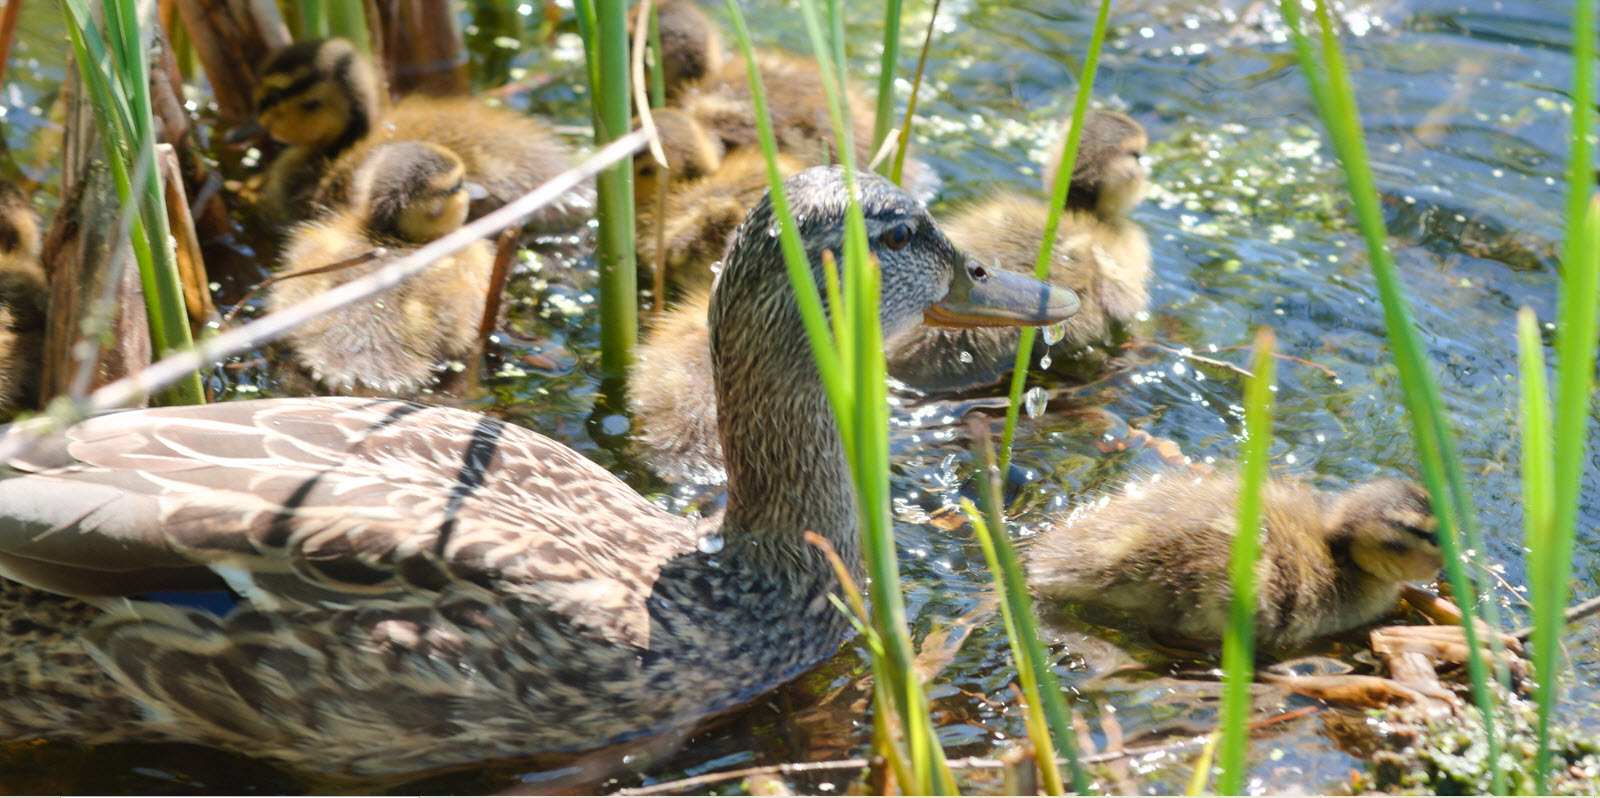 Ducks and ducklings in Nokomis, Mpls photo credit Fibonacci Blue